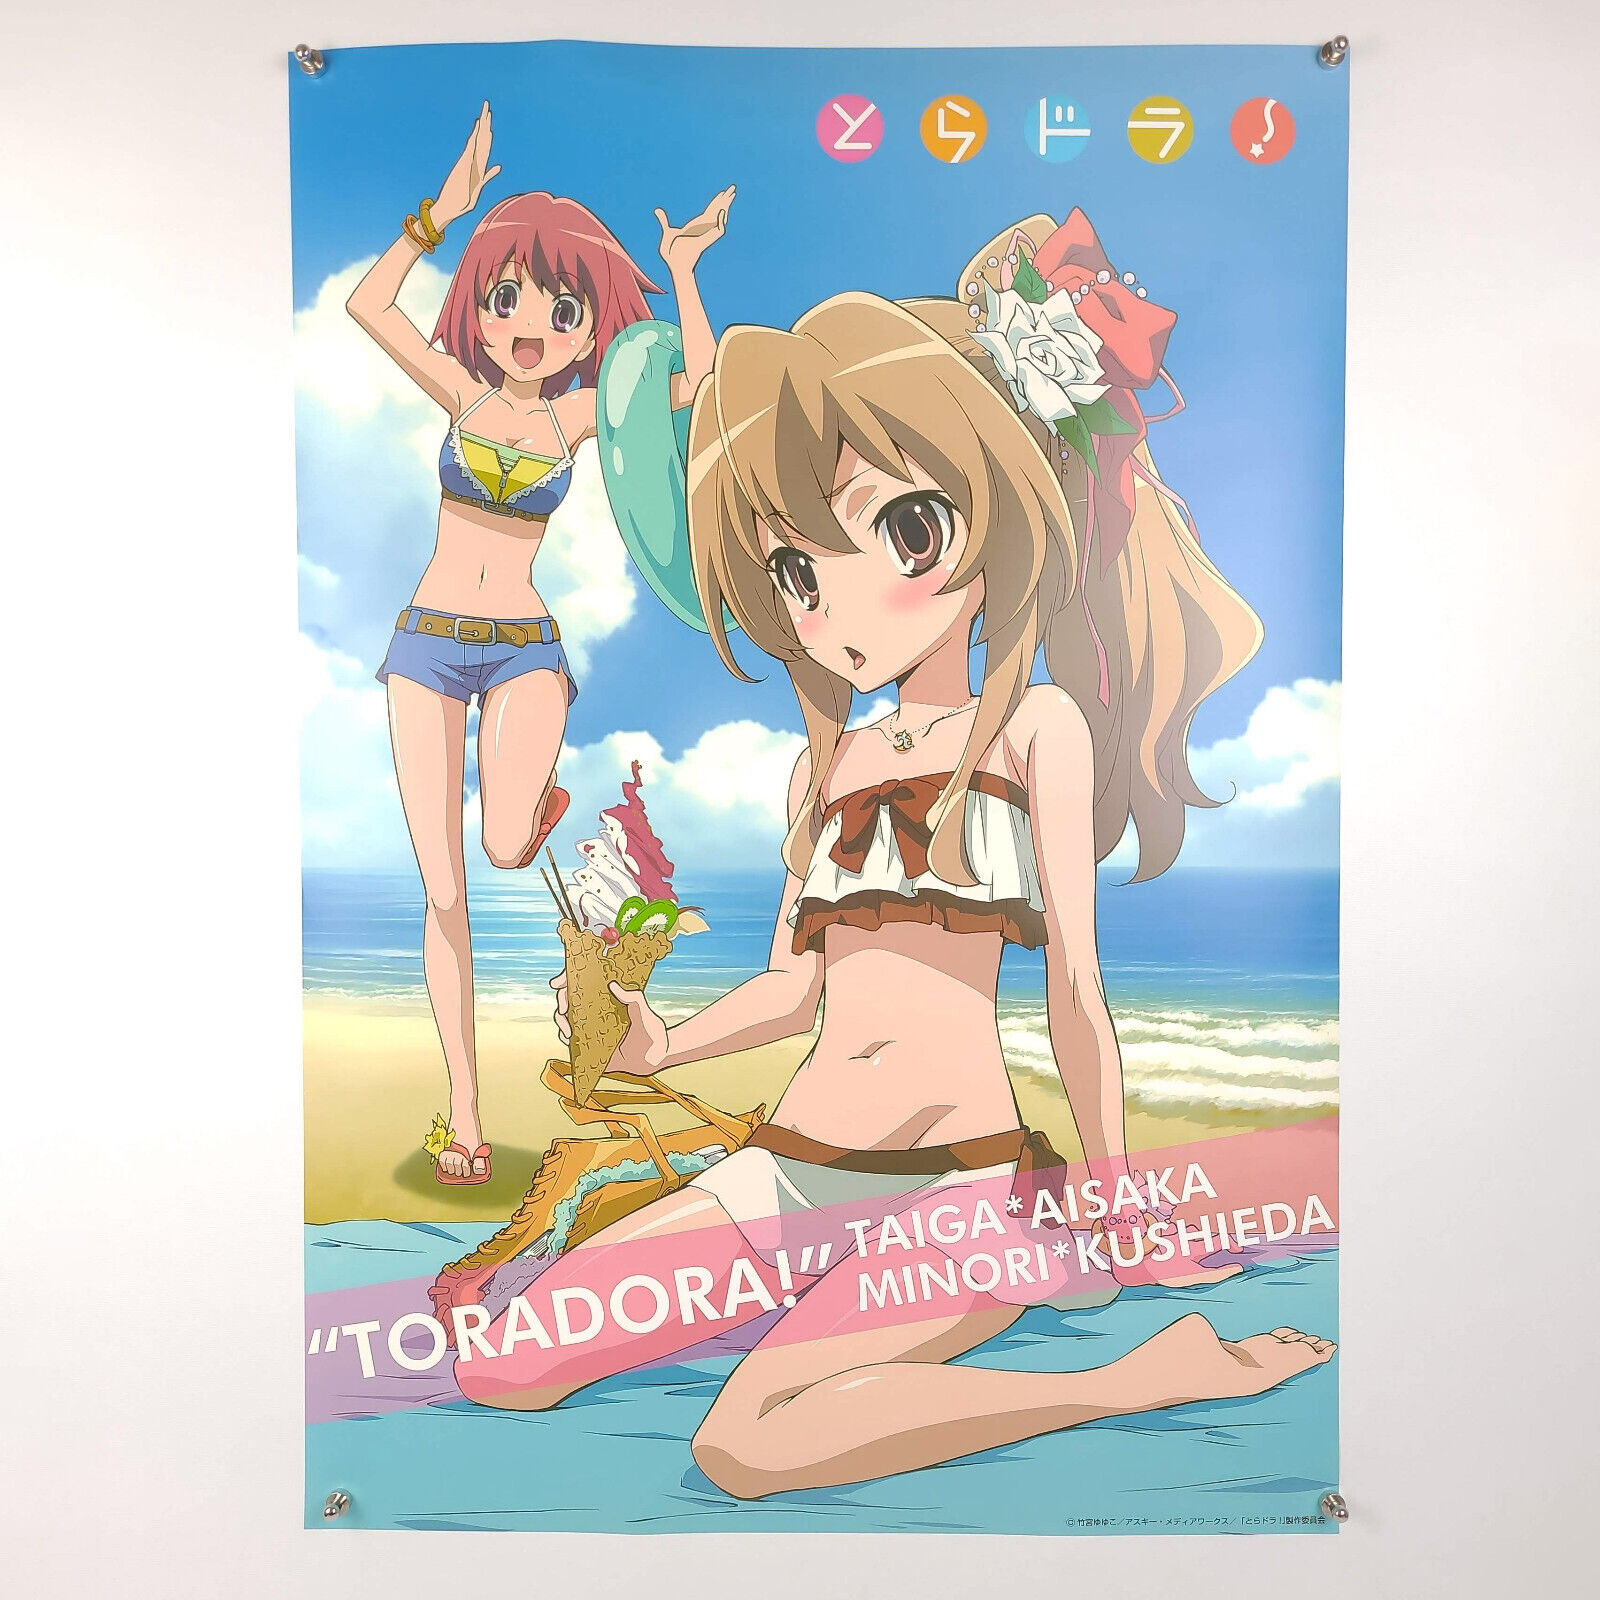 Toradora B2 Anime Bath Poster Taiga Aisaka Minori Kushieda Beach - US SELLER